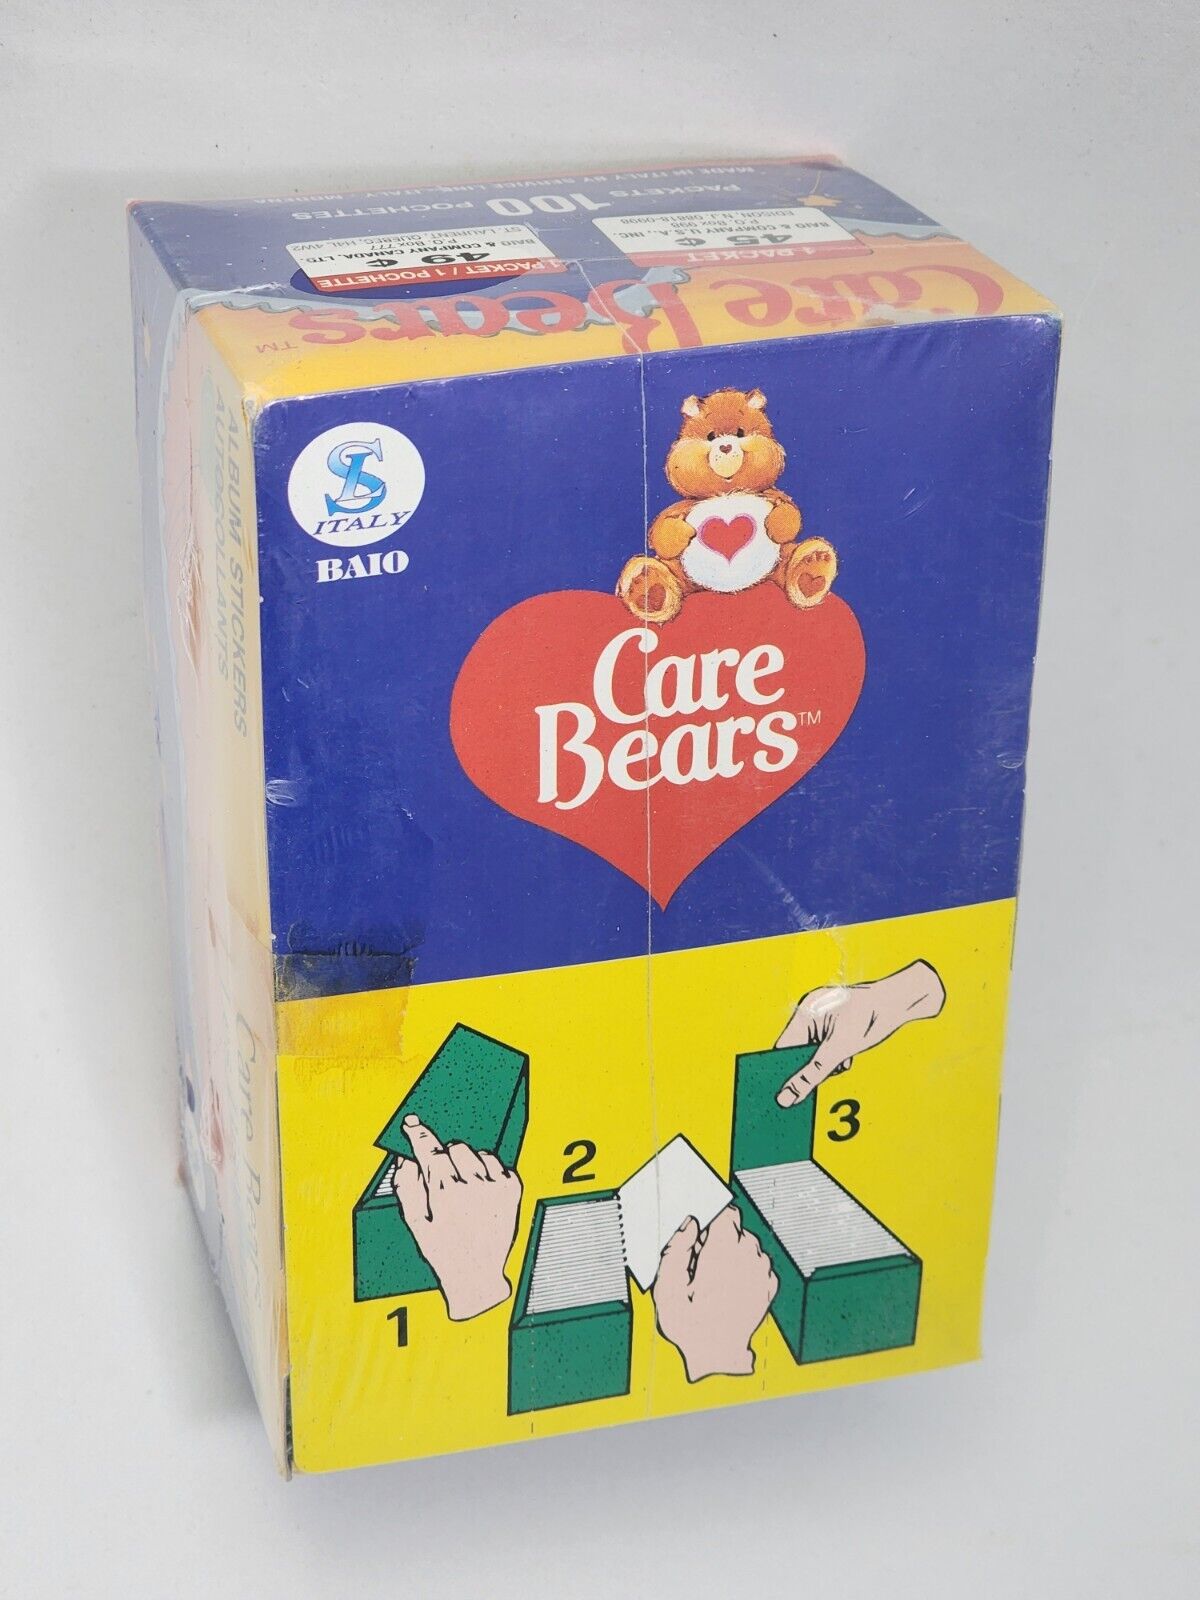 Care Bears Modena Baio Italy Album Stickers Case Lot 100 Packs 1994 Panini